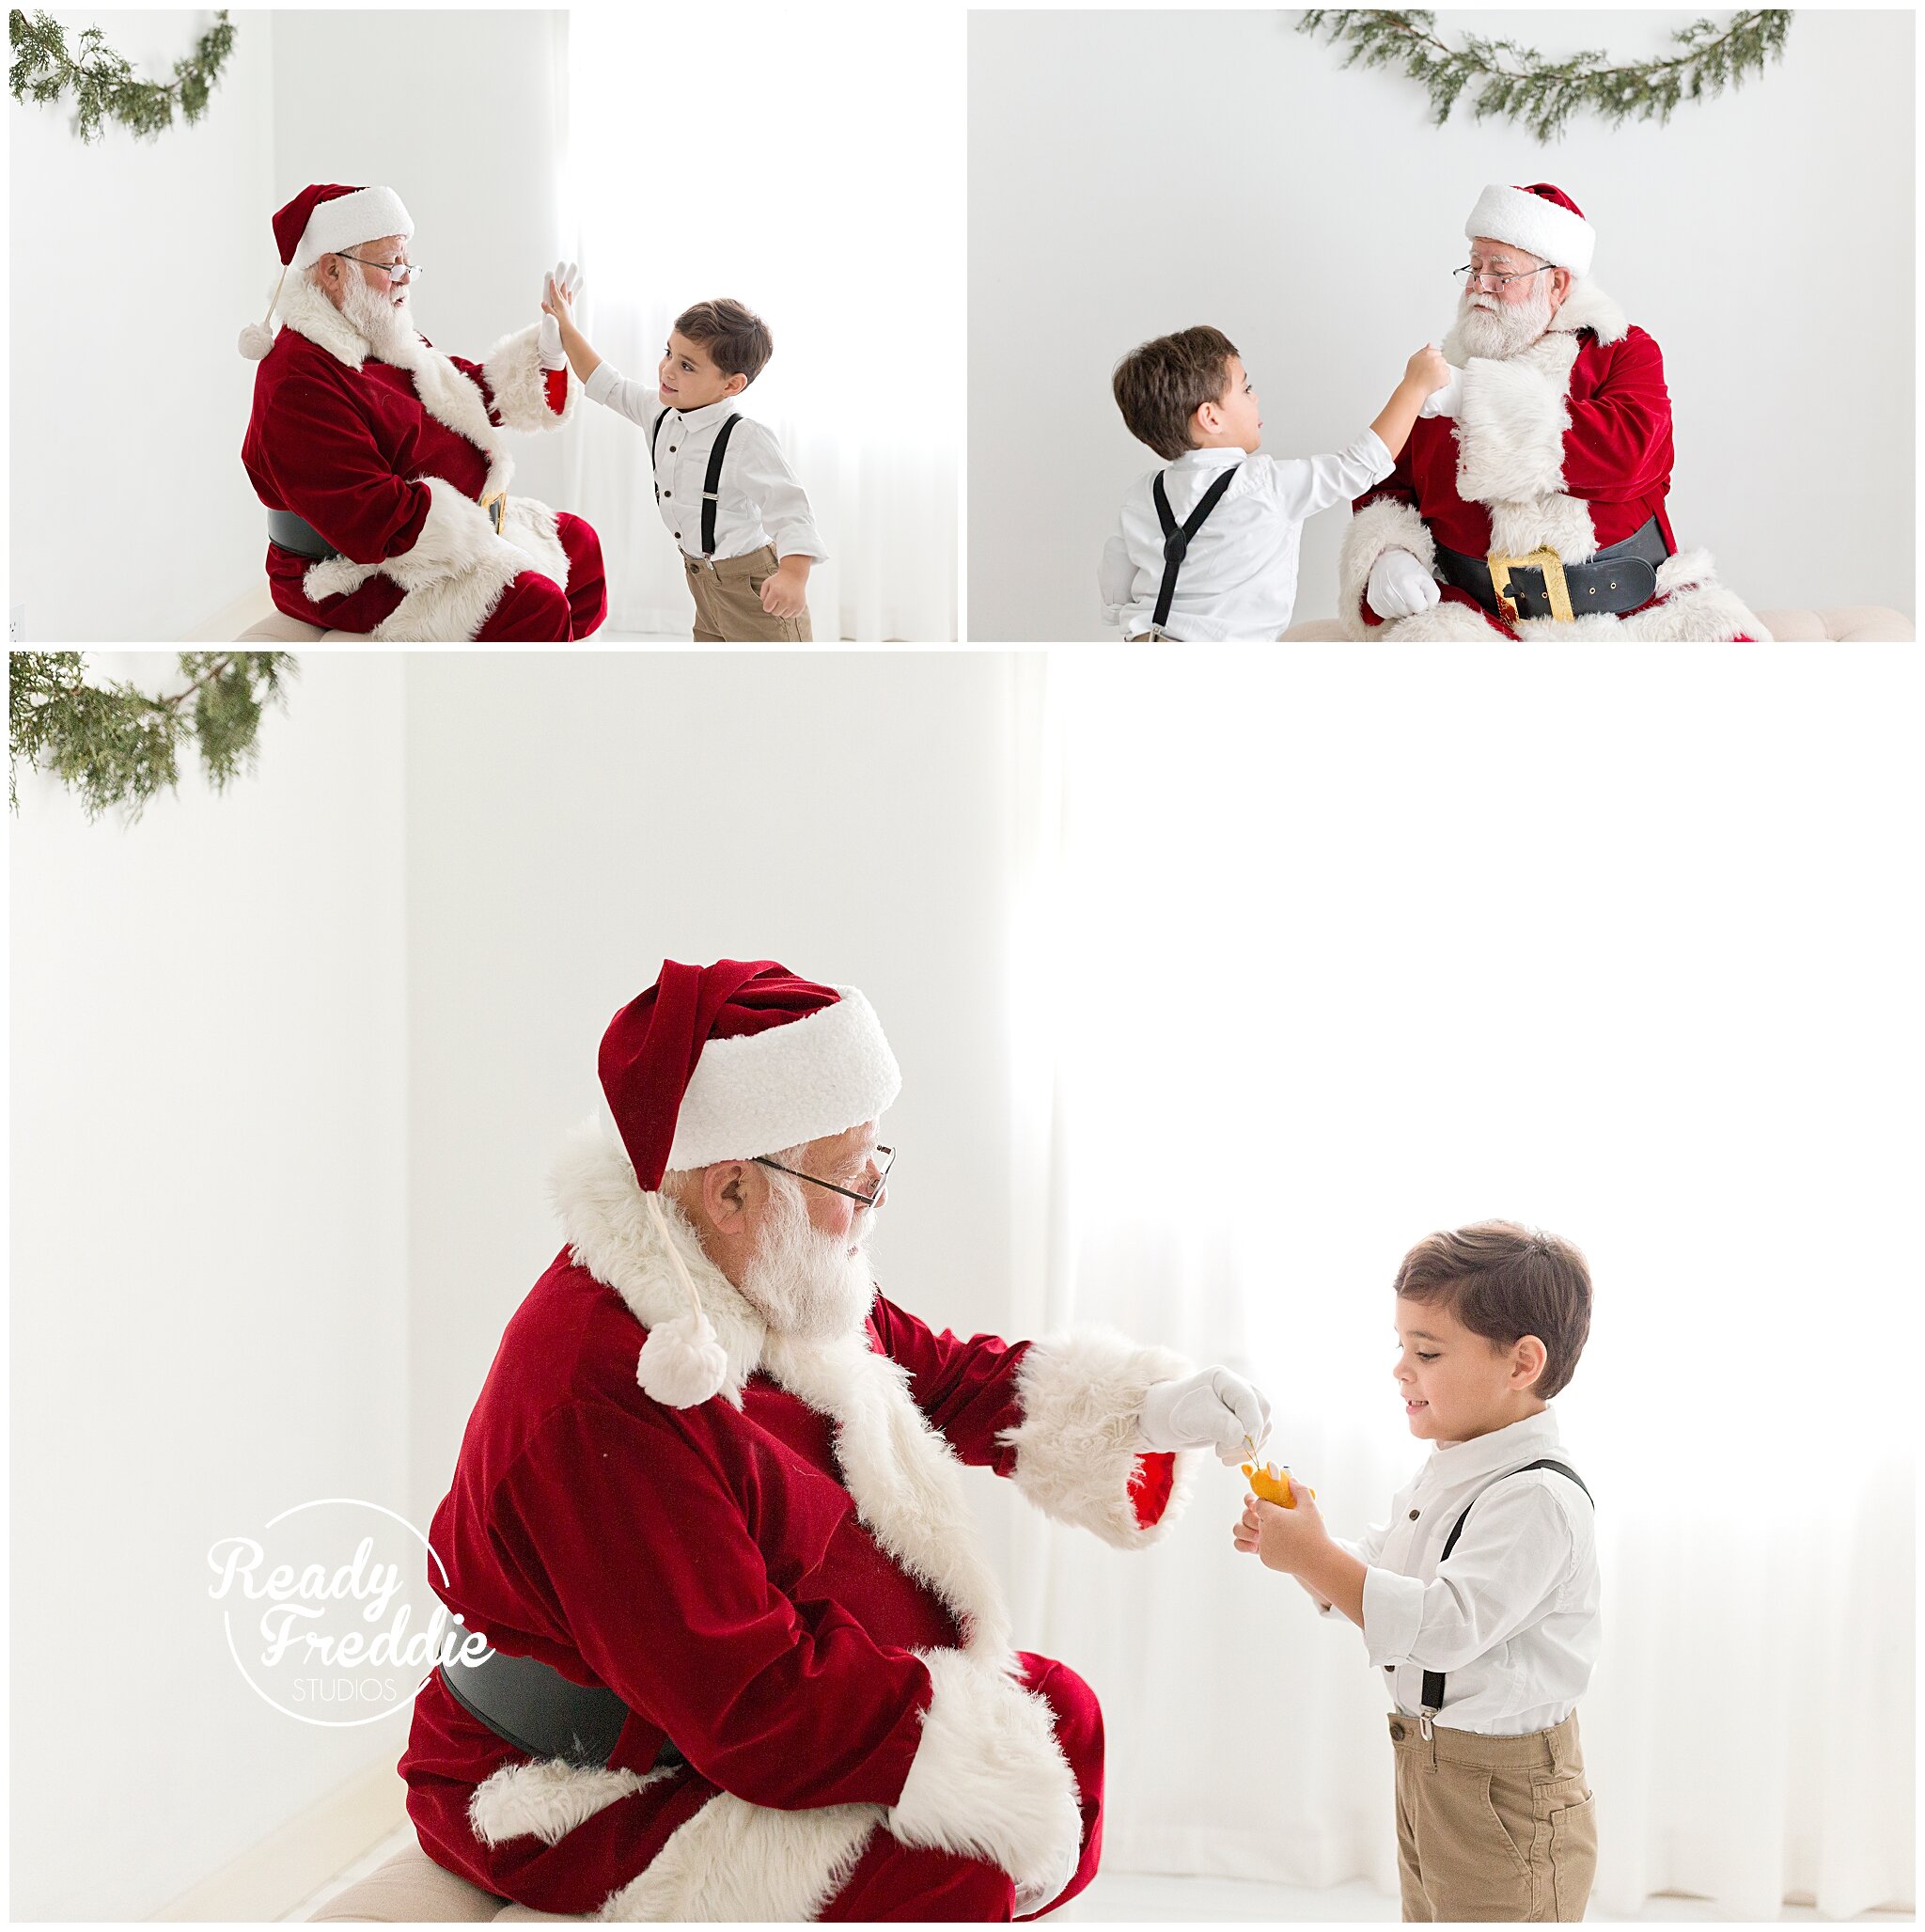 Boy high five with Santa during Christmas Minis | Ready Freddie Studios Miami, FL